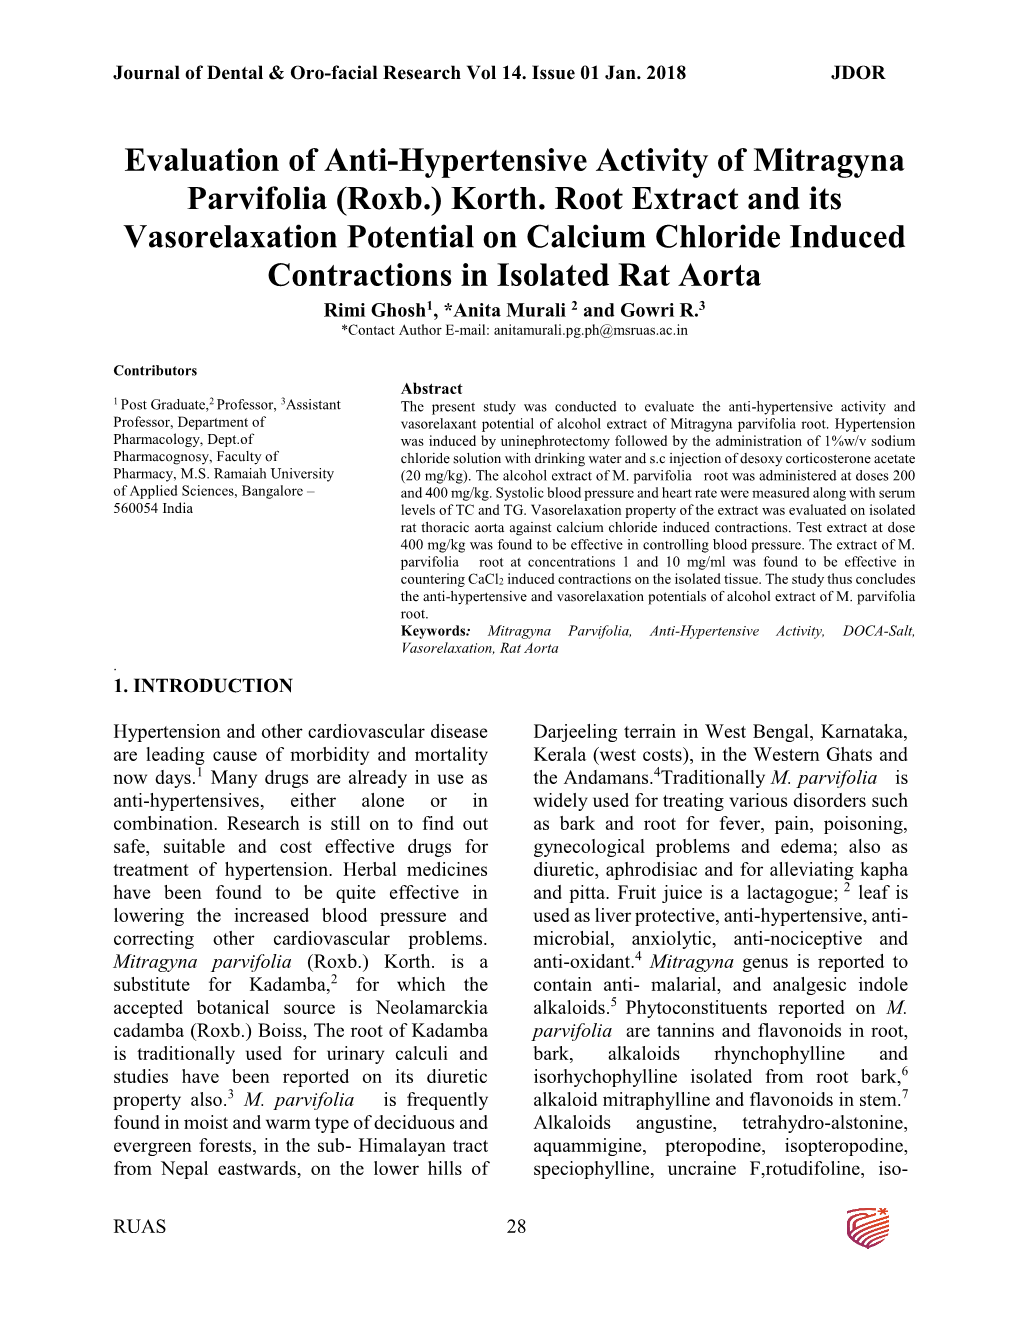 Evaluation of Anti-Hypertensive Activity of Mitragyna Parvifolia (Roxb.) Korth